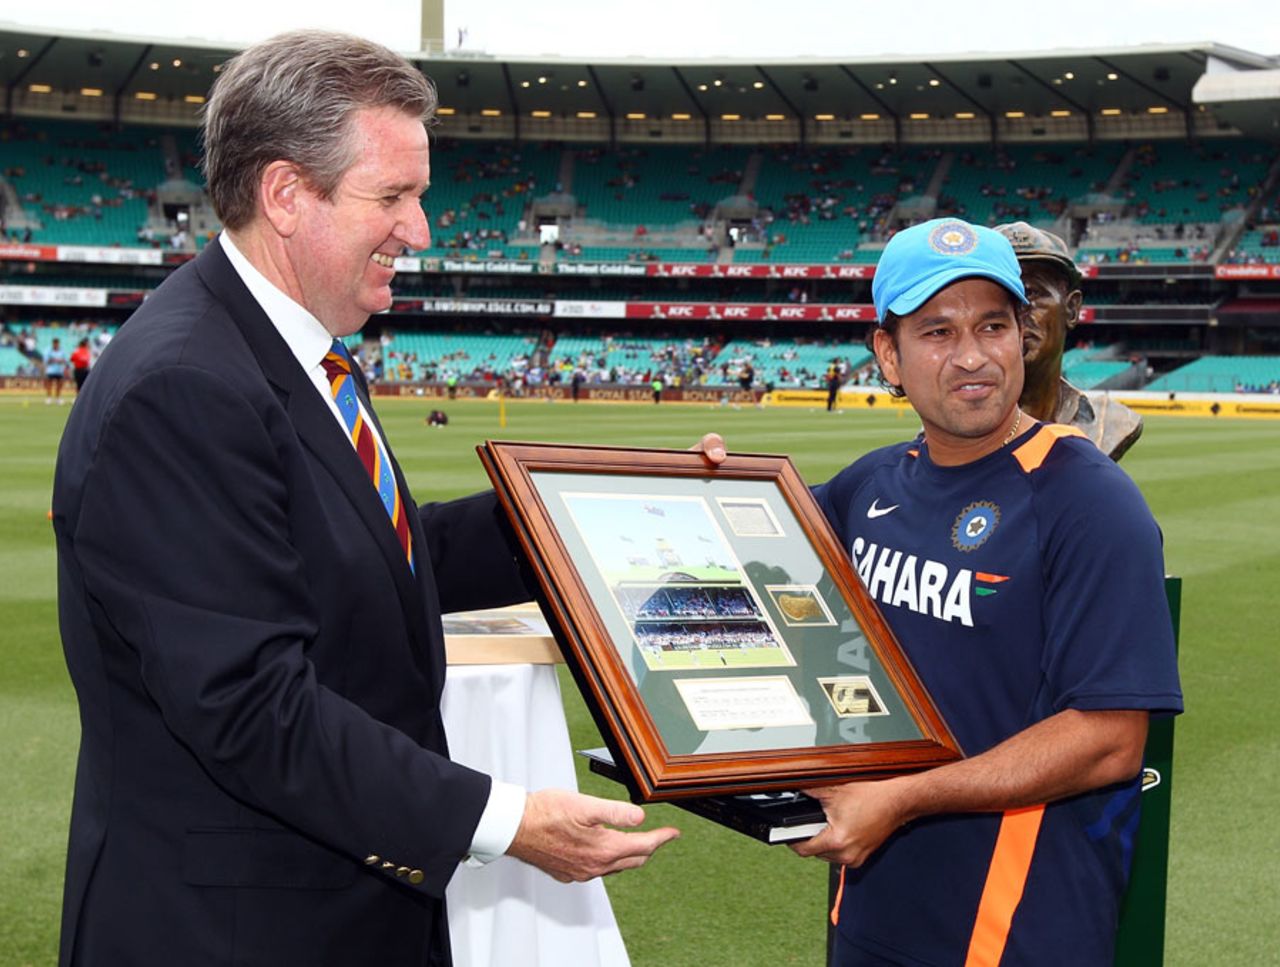 New South Wales premier Barry O'Farrell makes a presentation to Sachin Tendulkar, Australia v India, CB Series, Sydney, February 26, 2012